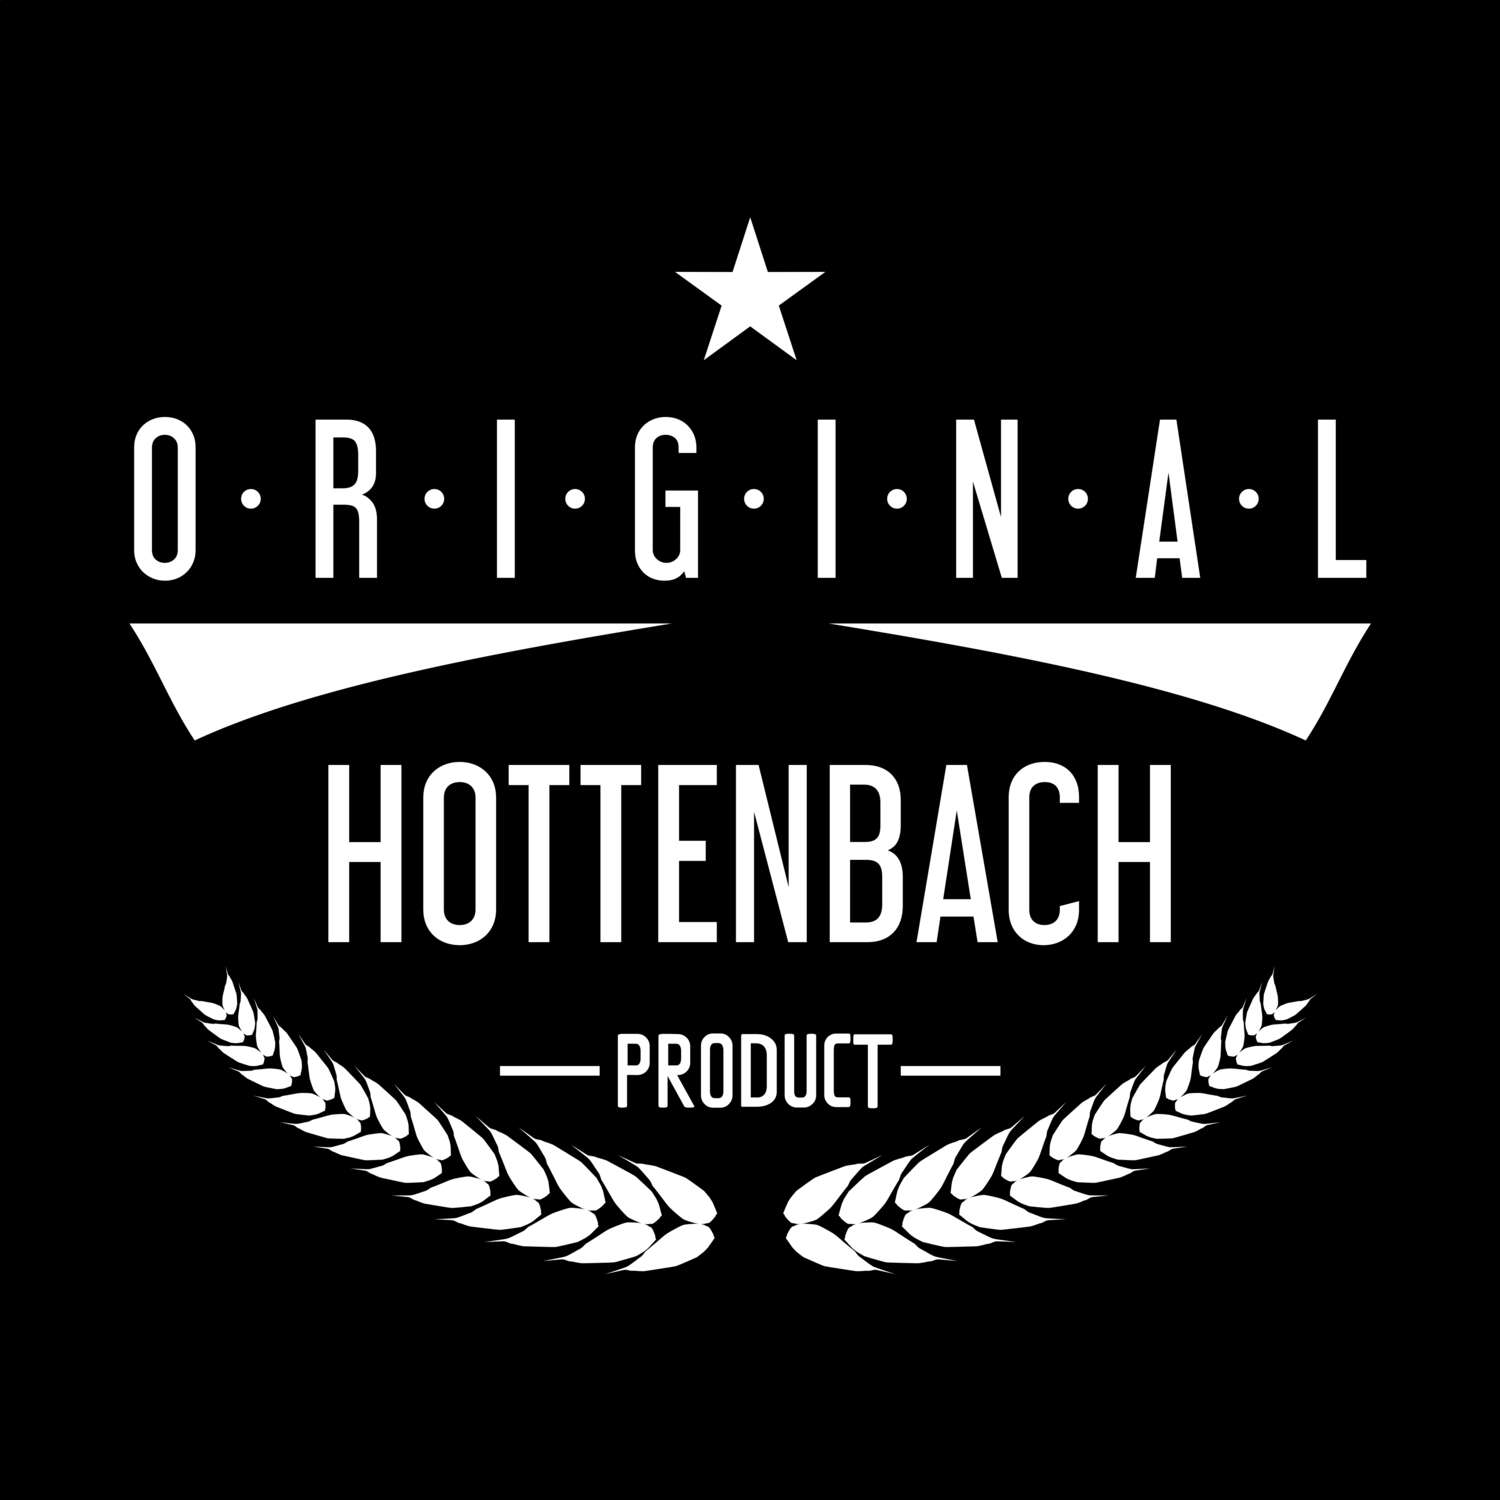 Hottenbach T-Shirt »Original Product«